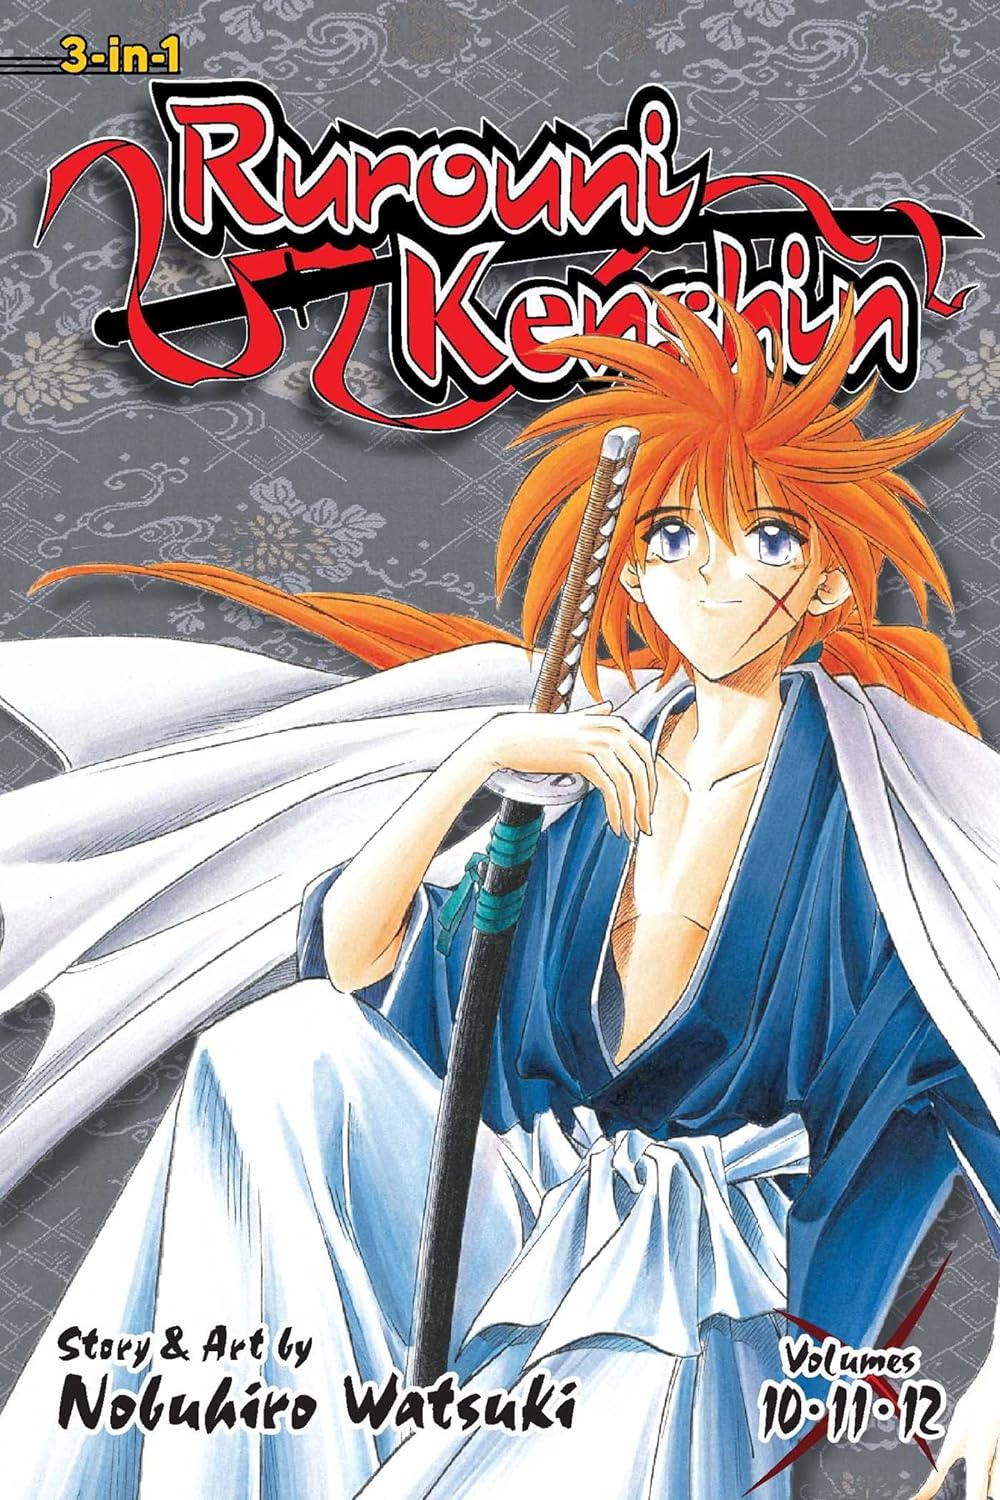 Rurouni Kenshin Volume 10-12 (3-in-1 Edition)